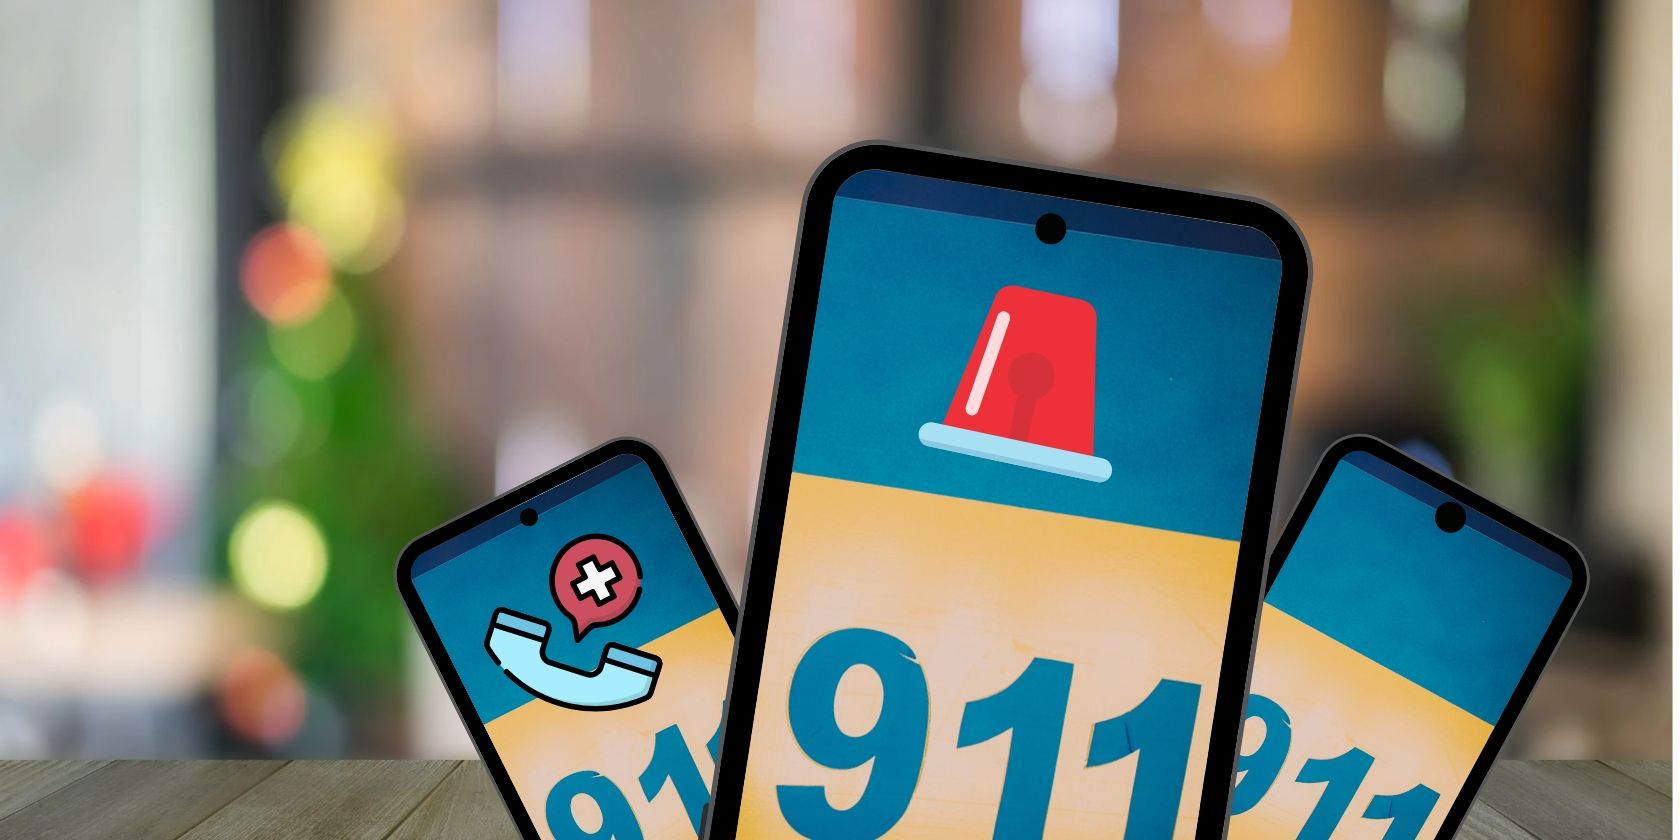 Smartphones showing 911 and siren on screen